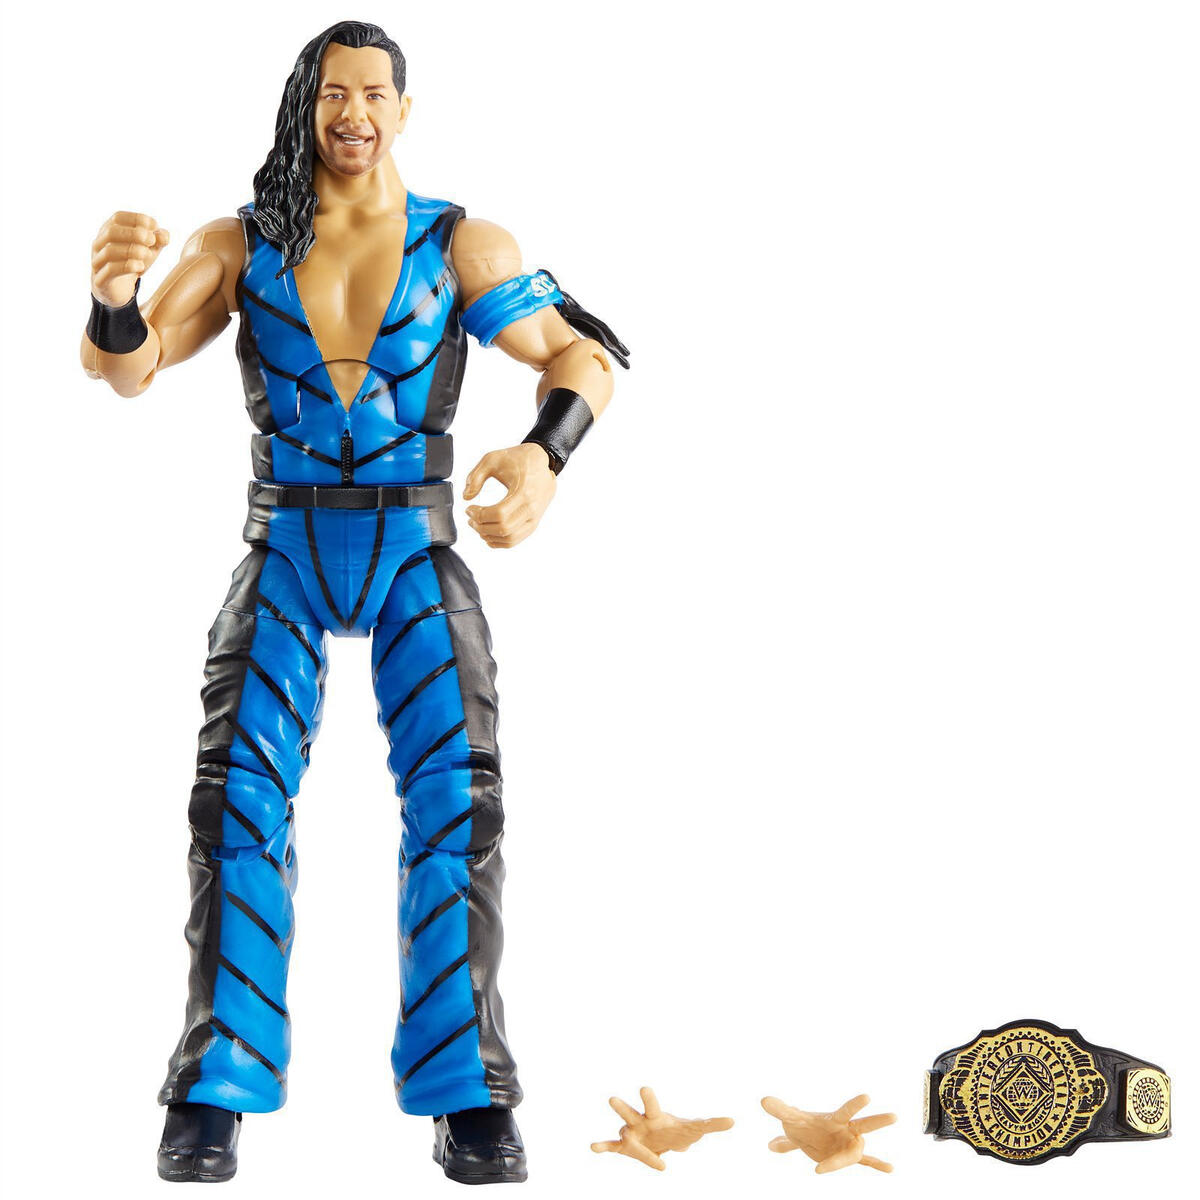 The Rock - WWE Elite 81 WWE Toy Wrestling Action Figure by Mattel!